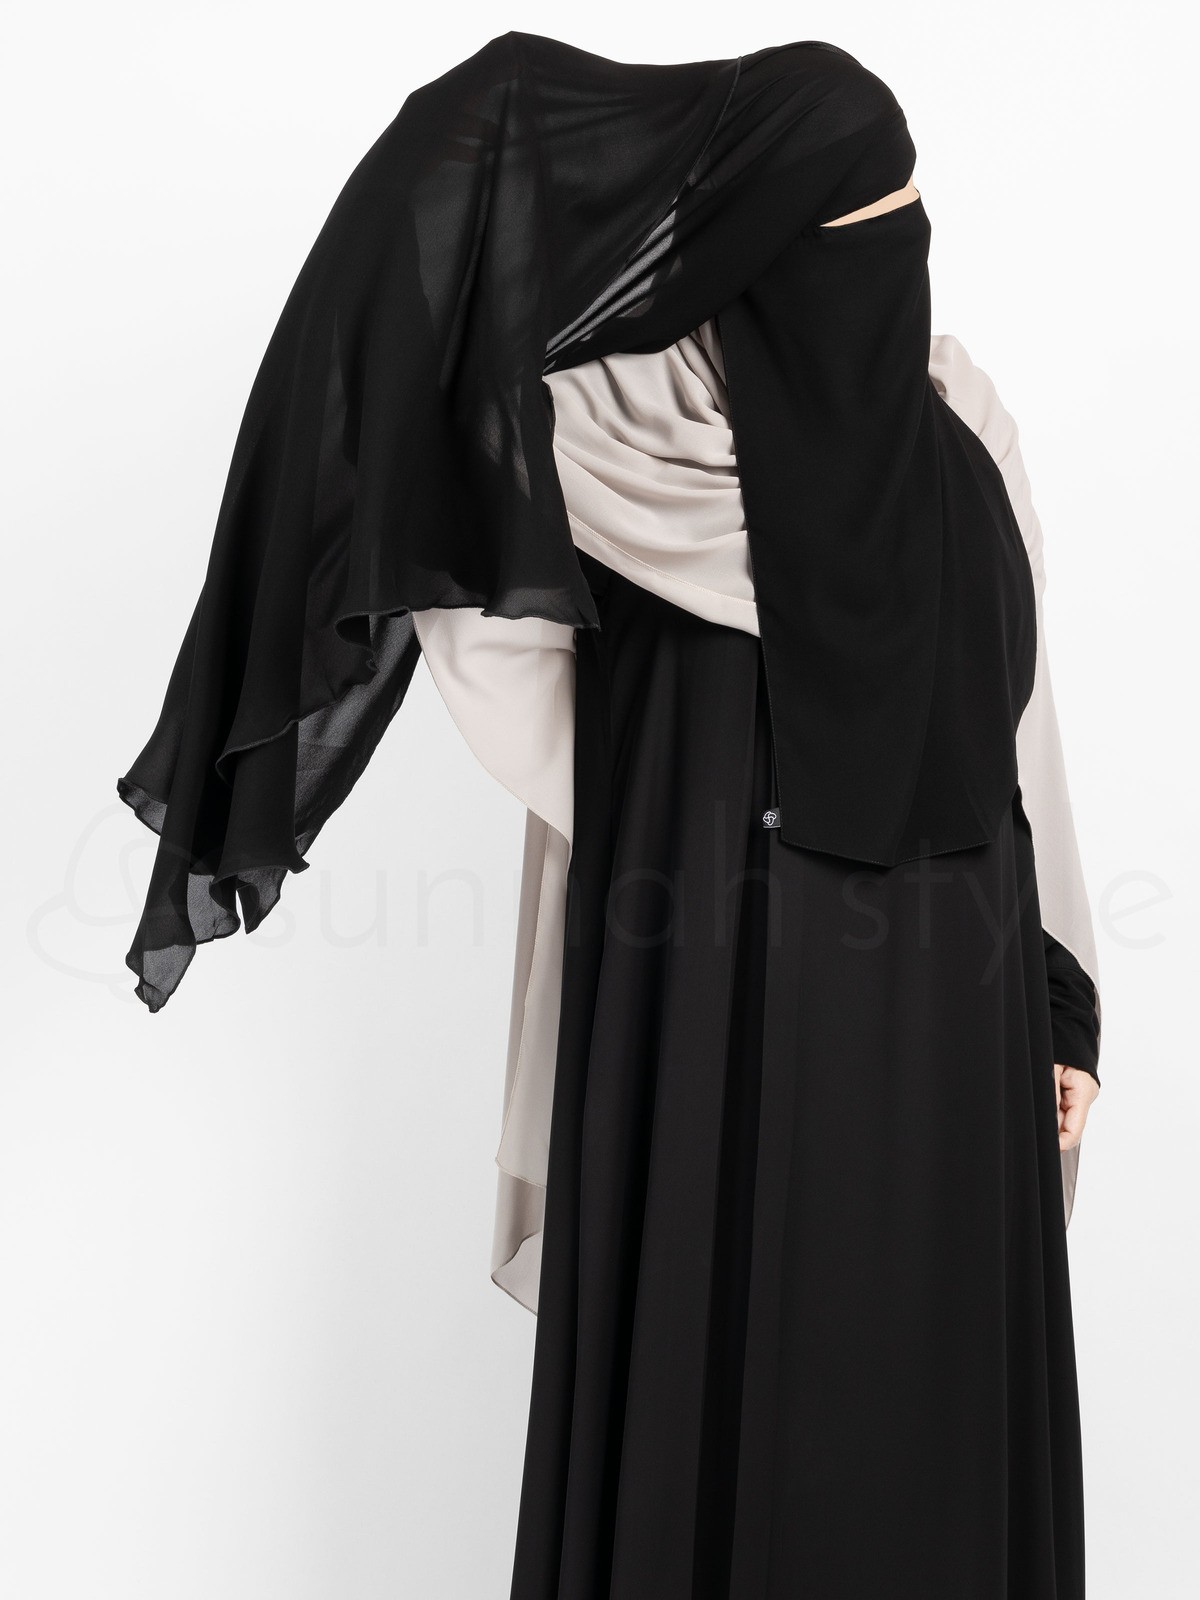 Sunnah Style - Extra Long Diamond Niqab (Black)